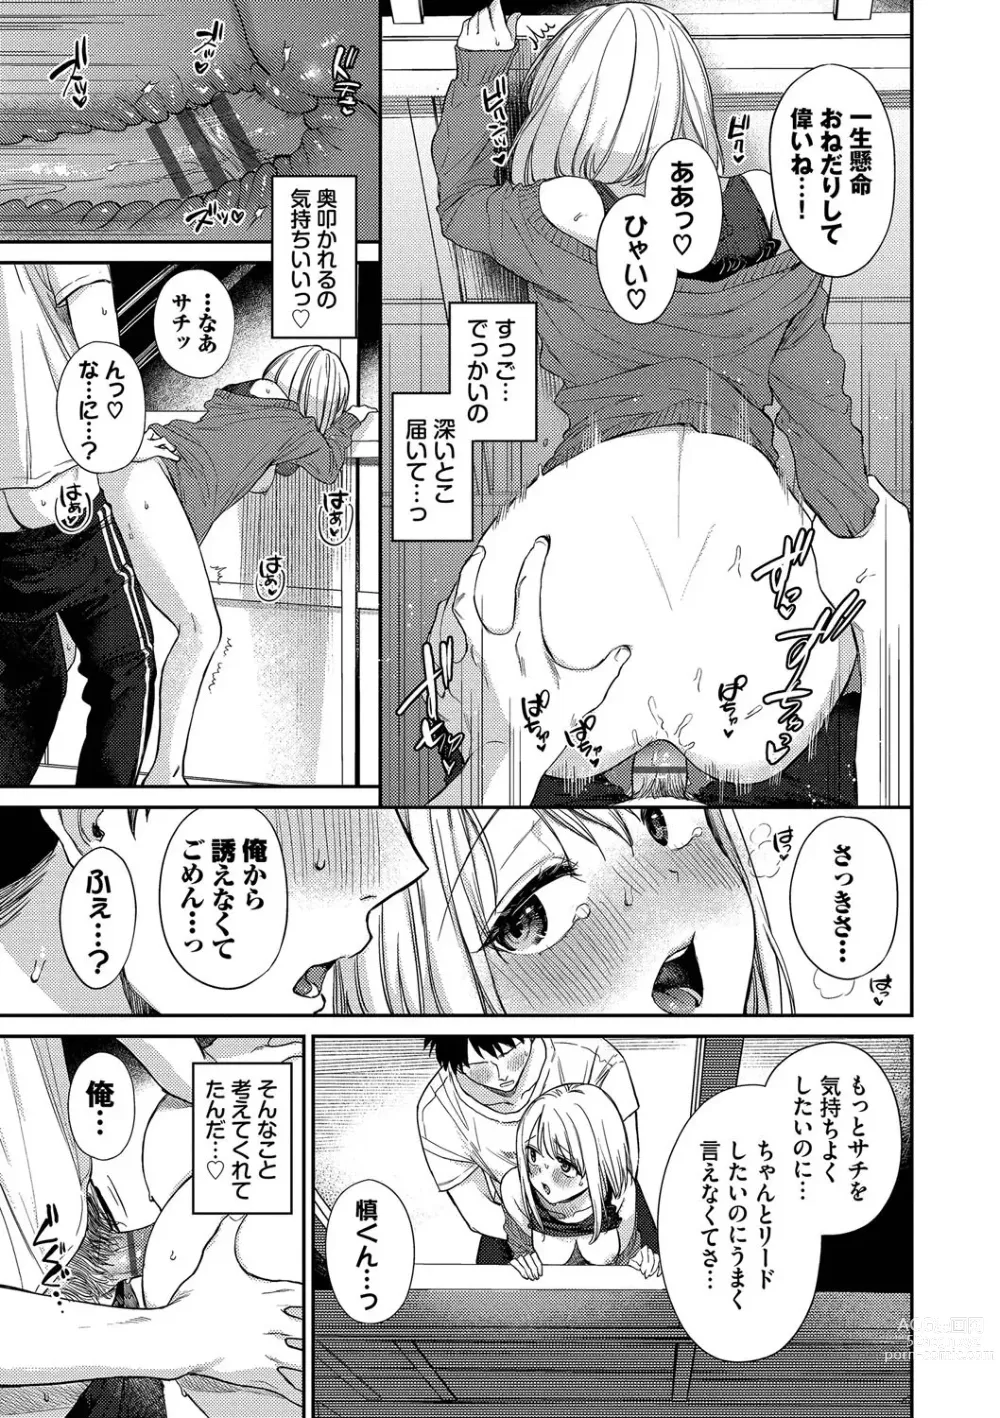 Page 192 of manga Mutsuri Bloom